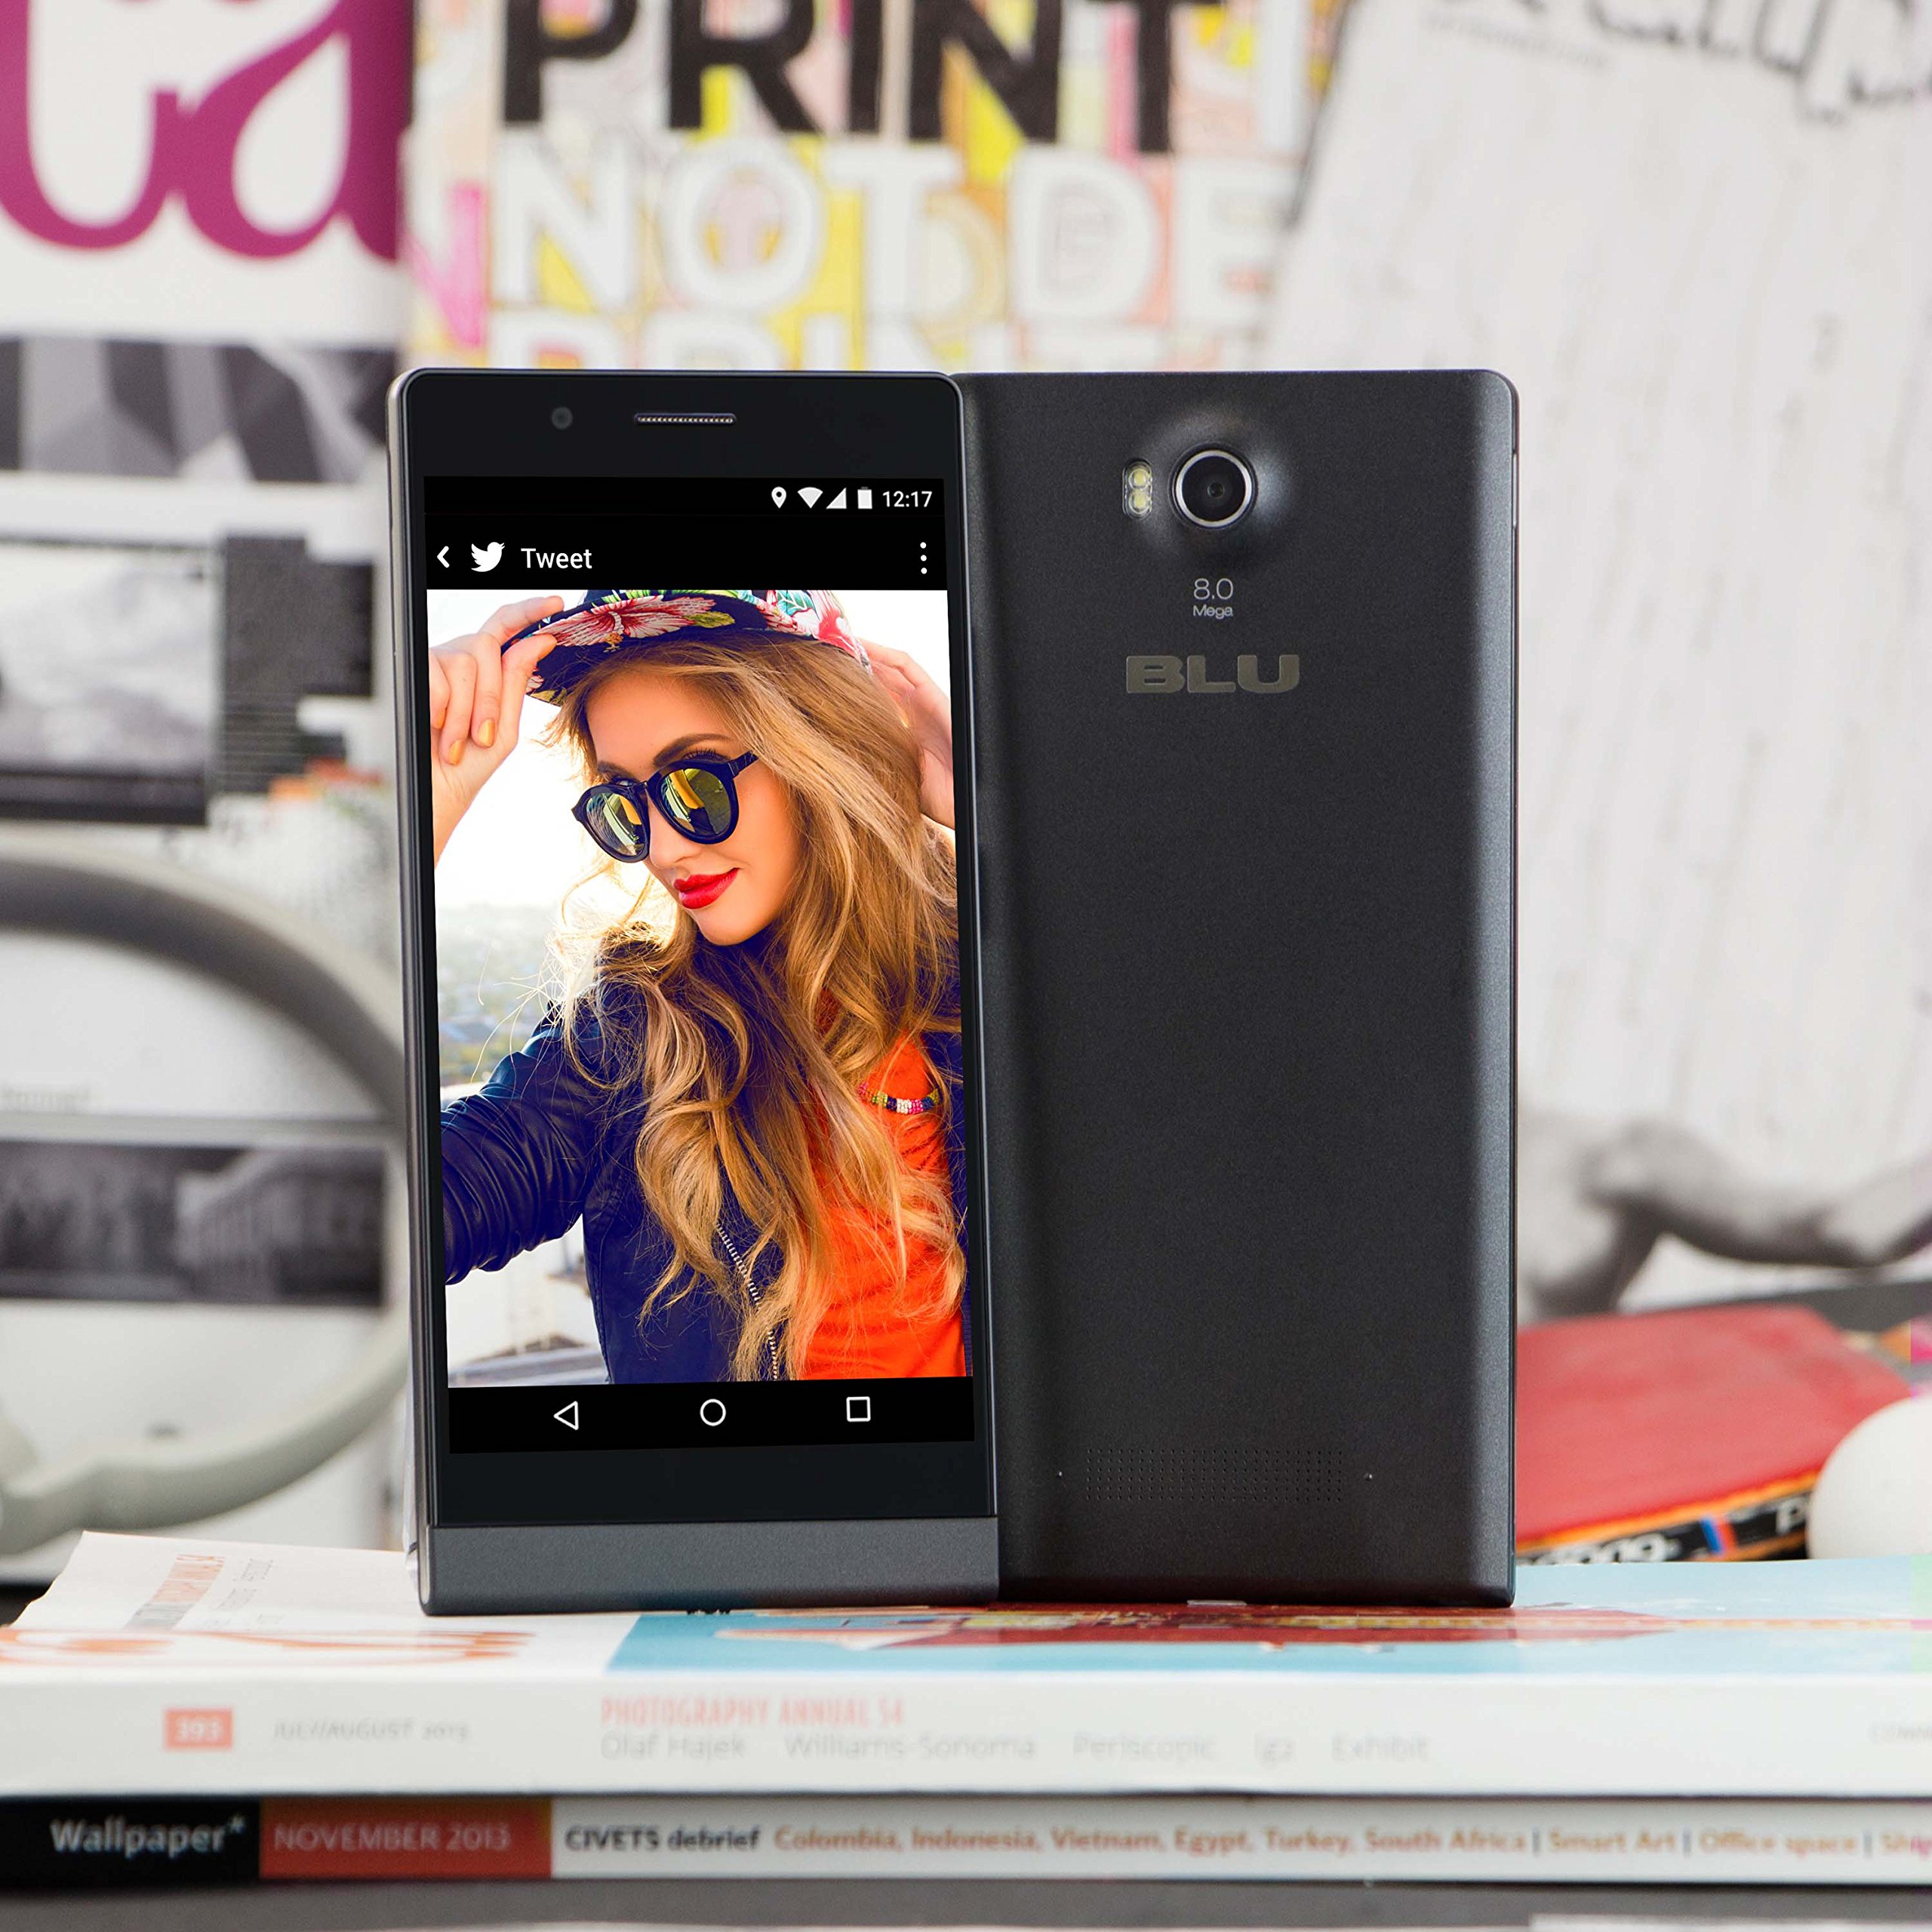 BLU L290U Life 8 XL Unlocked GSM Smartphone with 8 GB Internal Memory, Android OS, v4.4.2 KitKat (Black)